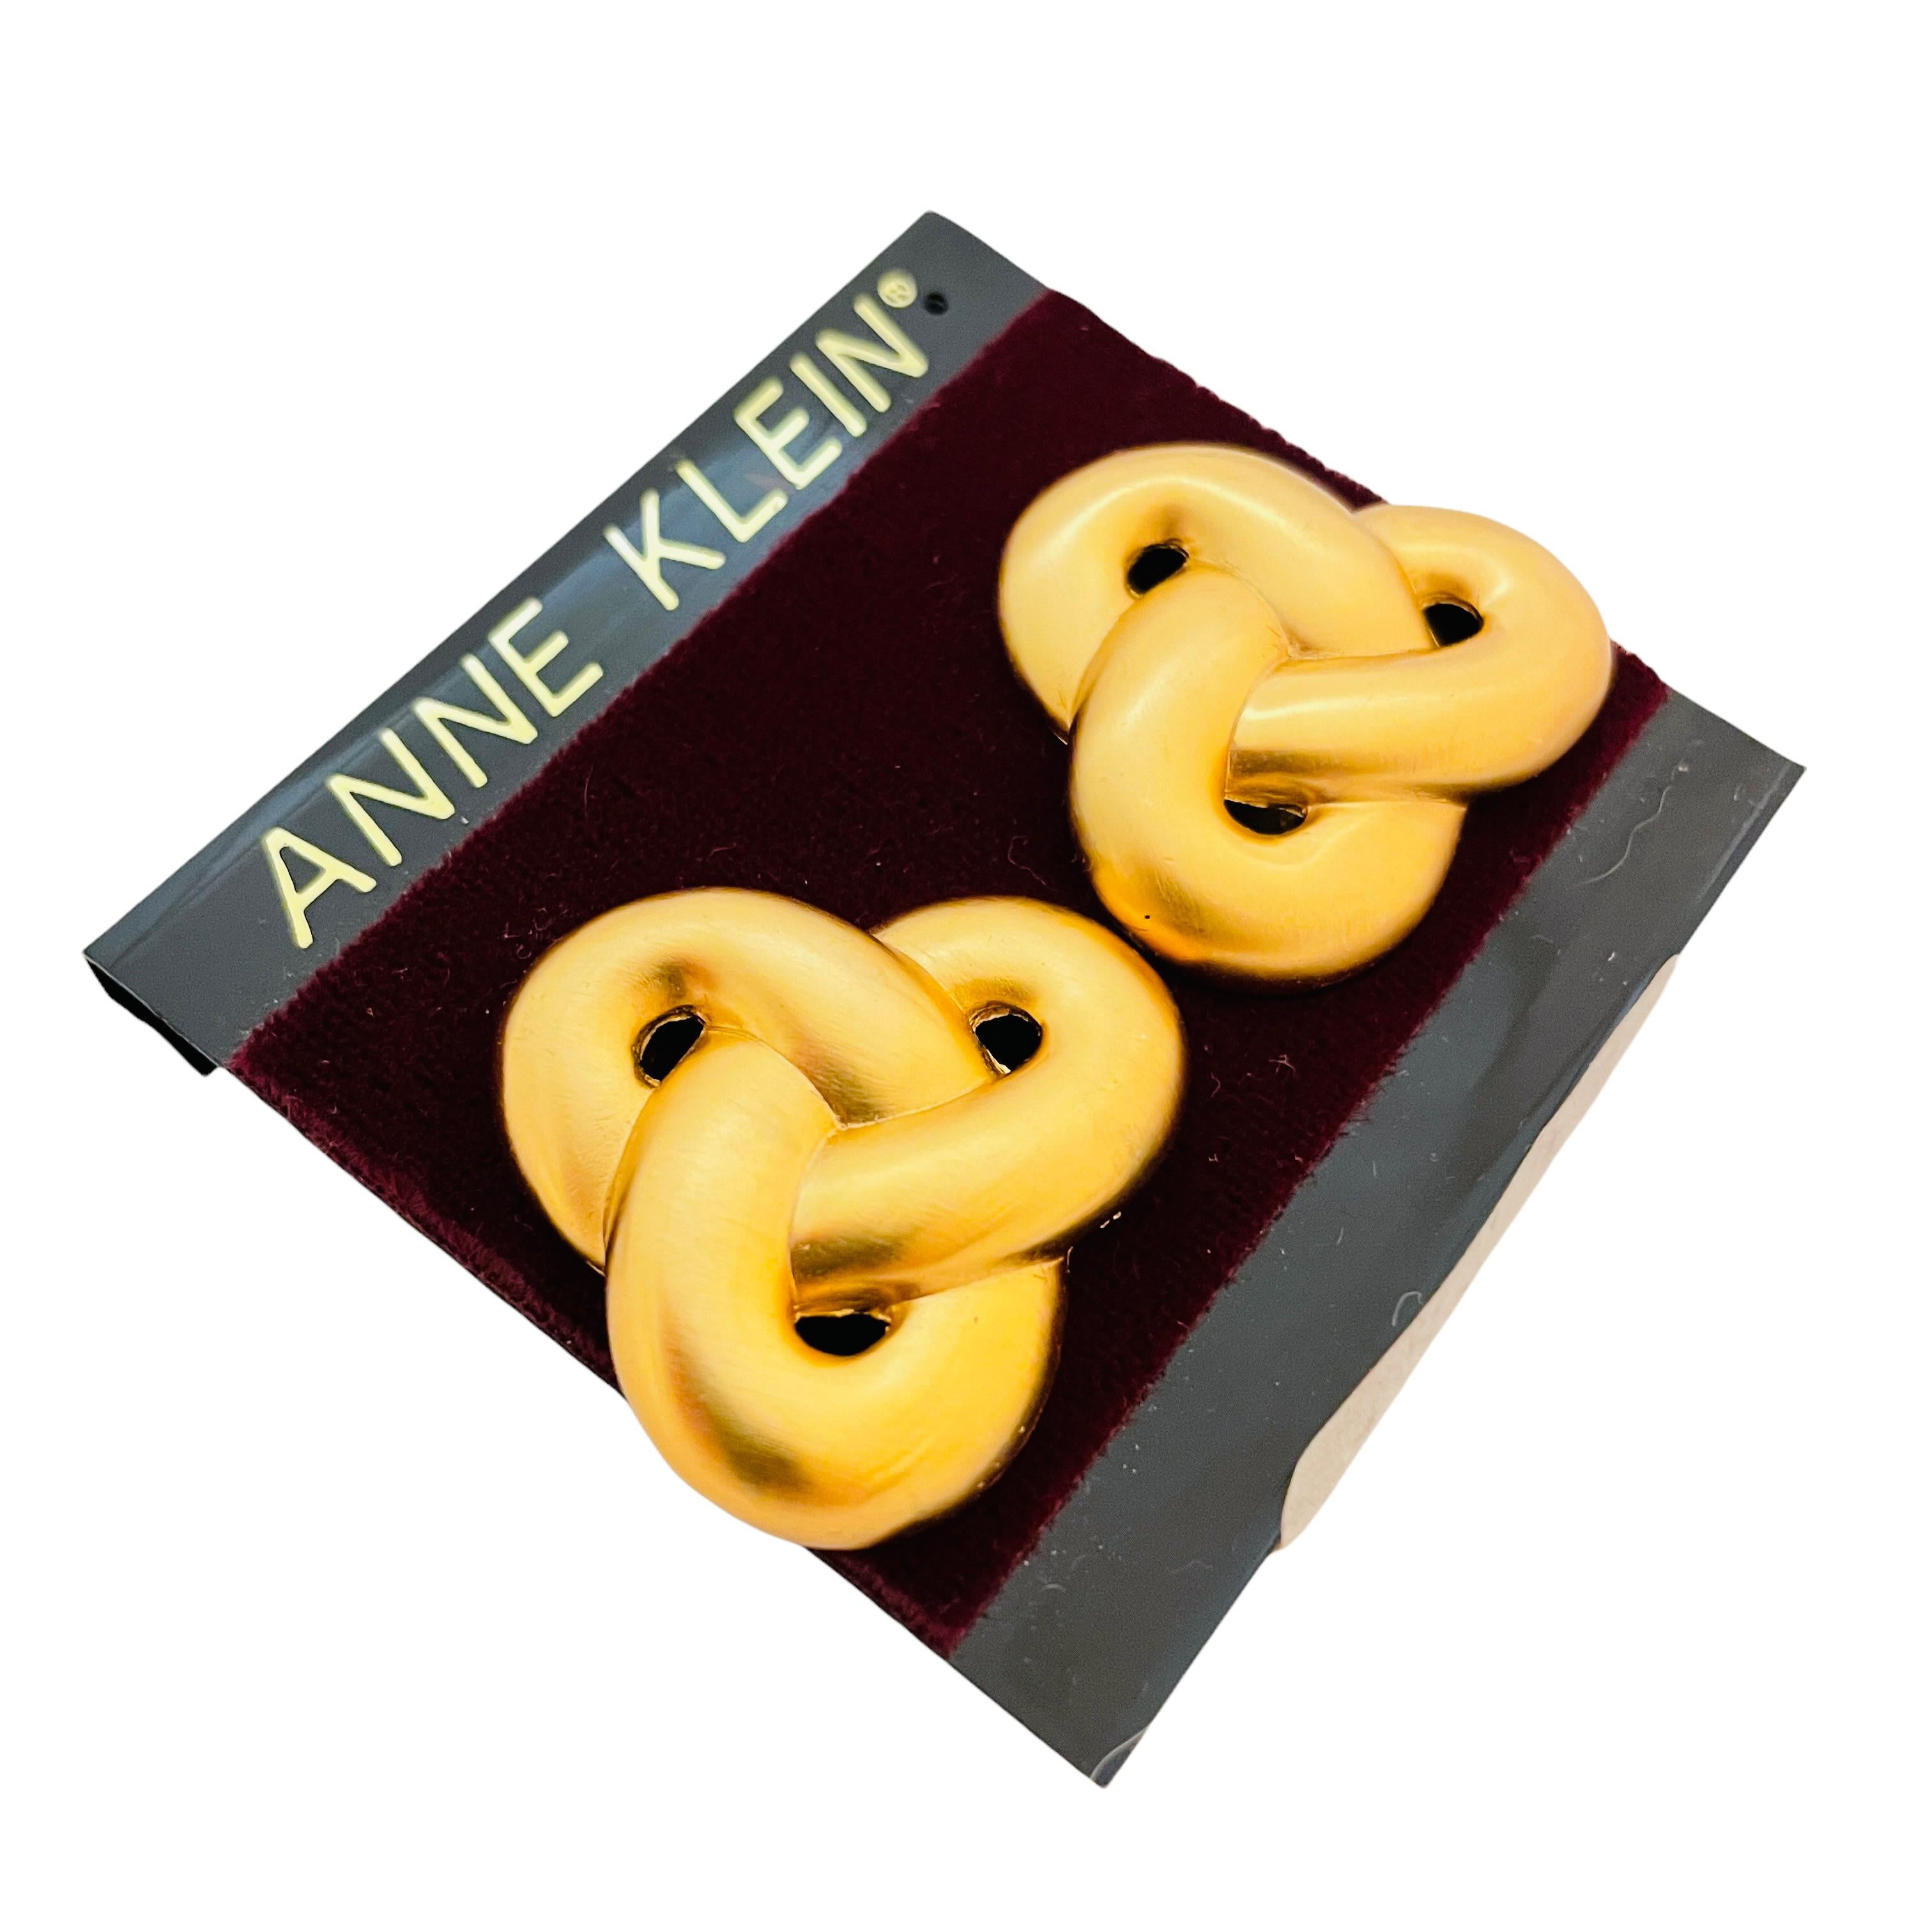 DETAILS

• unsigned ANNE KLEIN

• gold tone 

• vintage designer runway earrings

MEASUREMENTS

• 1.25